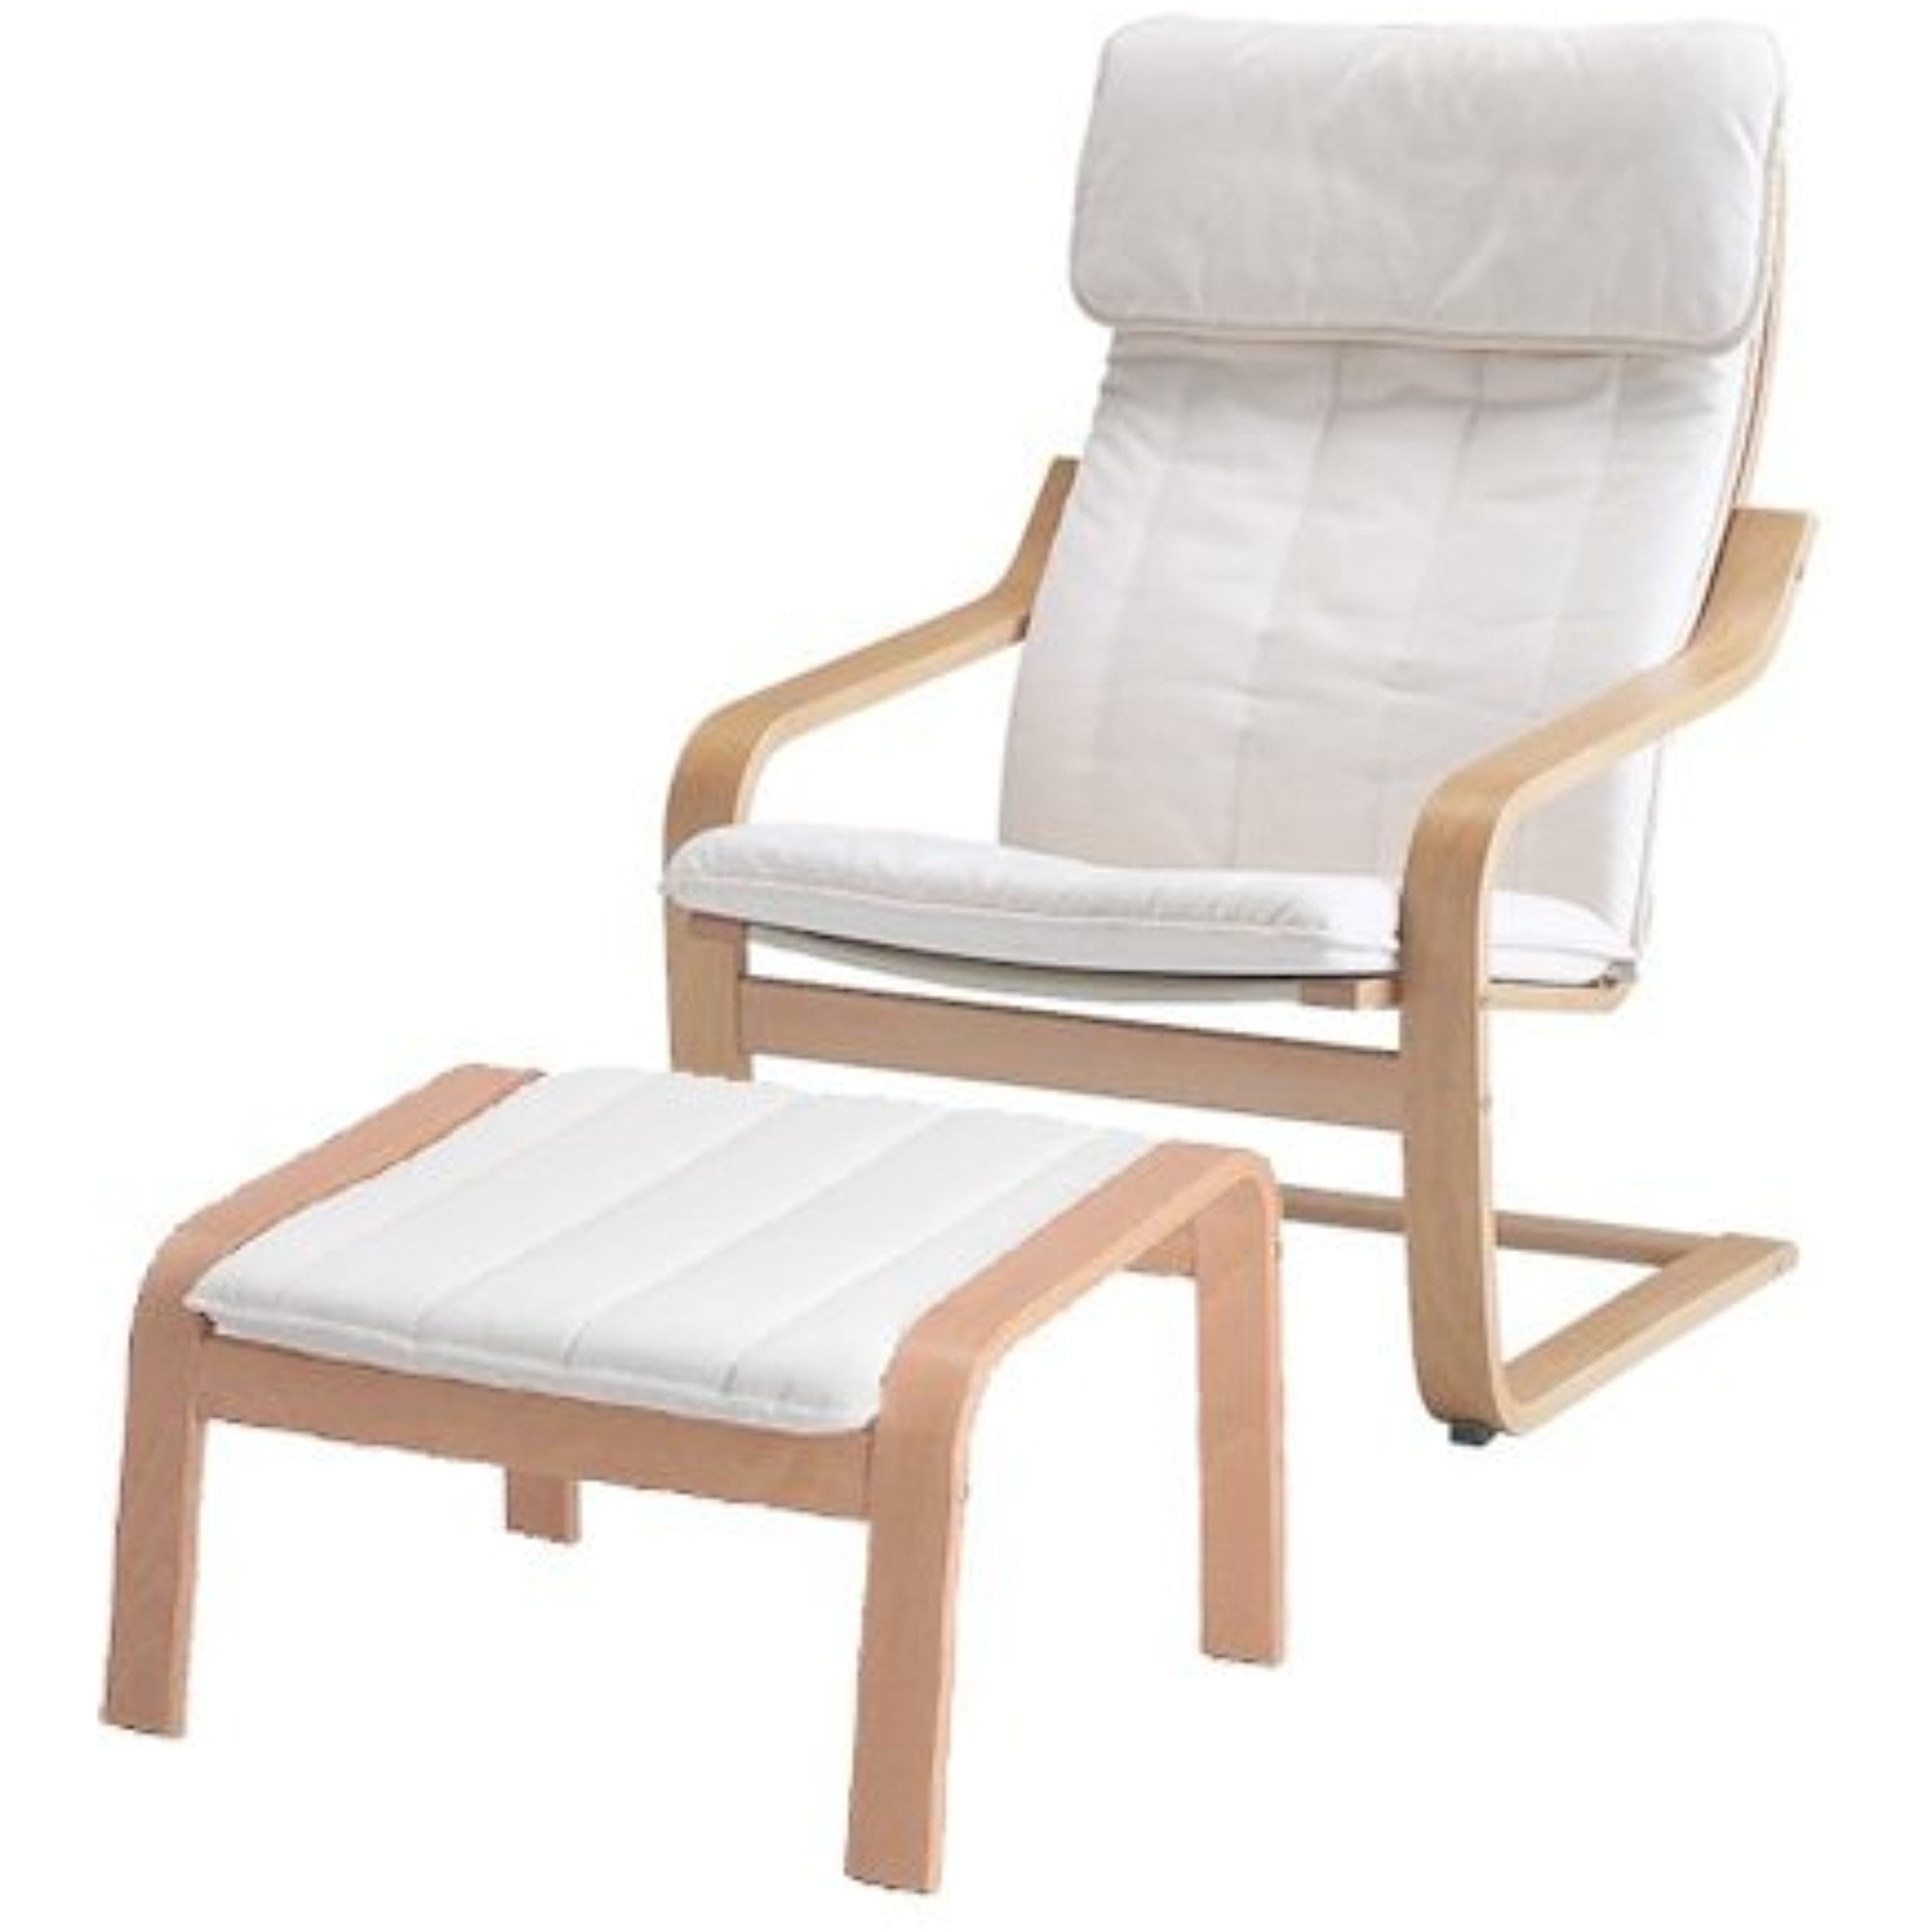 Ikea Poang Chair Armchair And Footstool, Ikea Poang Chair And Footstool Cover Set